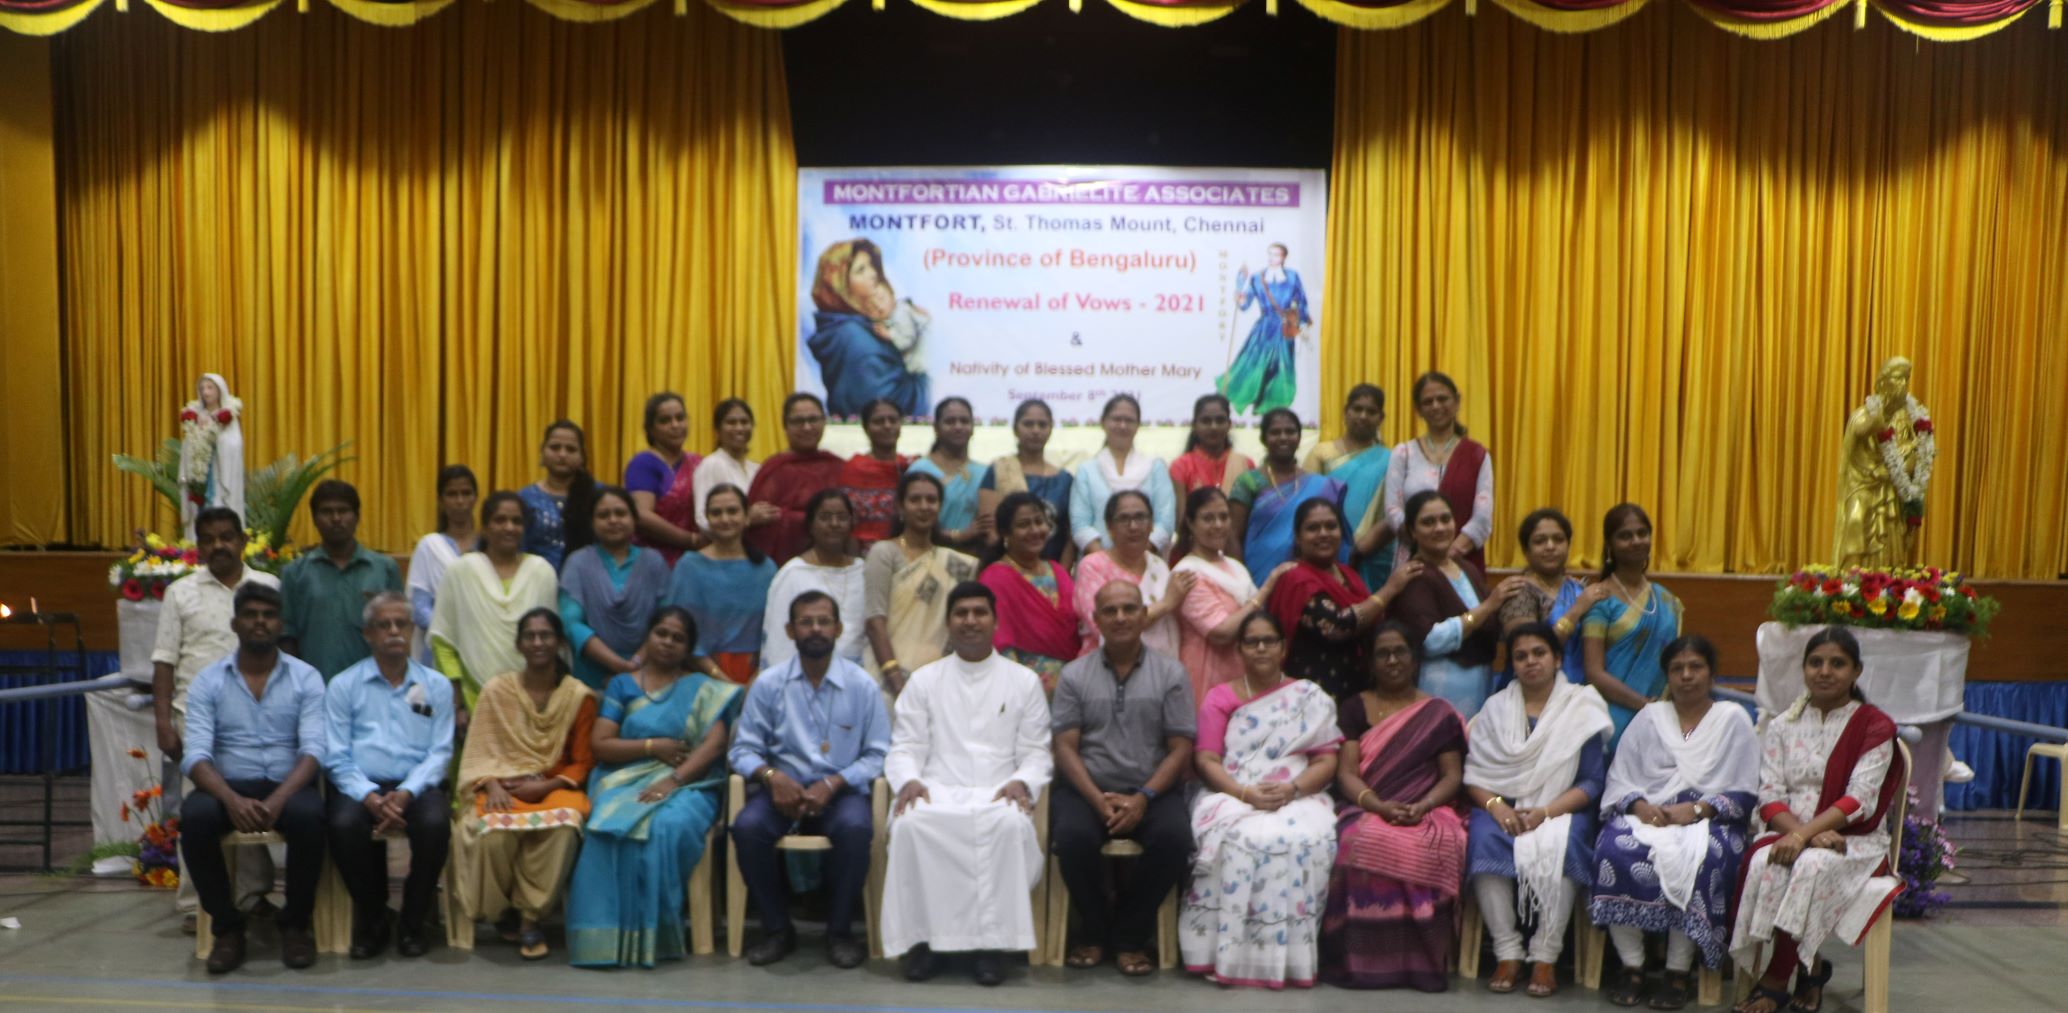 MGA – Province of Bengaluru – ST THOMAS MOUNT CHENNAI – 40 members renewed their Consacration